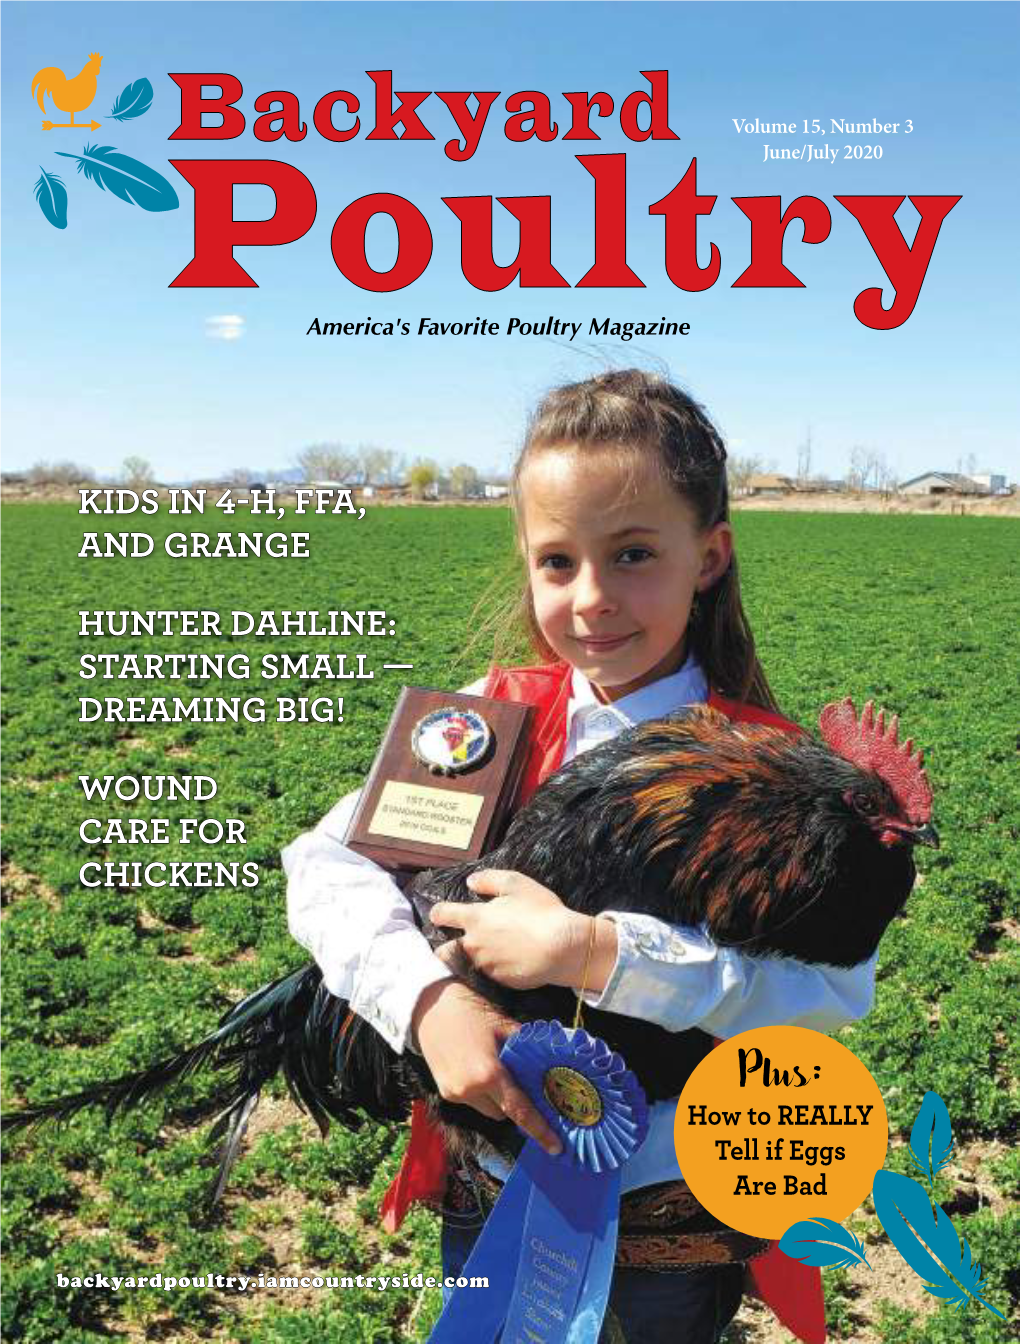 Backyard Volume 15, Number 3 Poultryjune/July 2020 America's Favorite Poultry Magazine